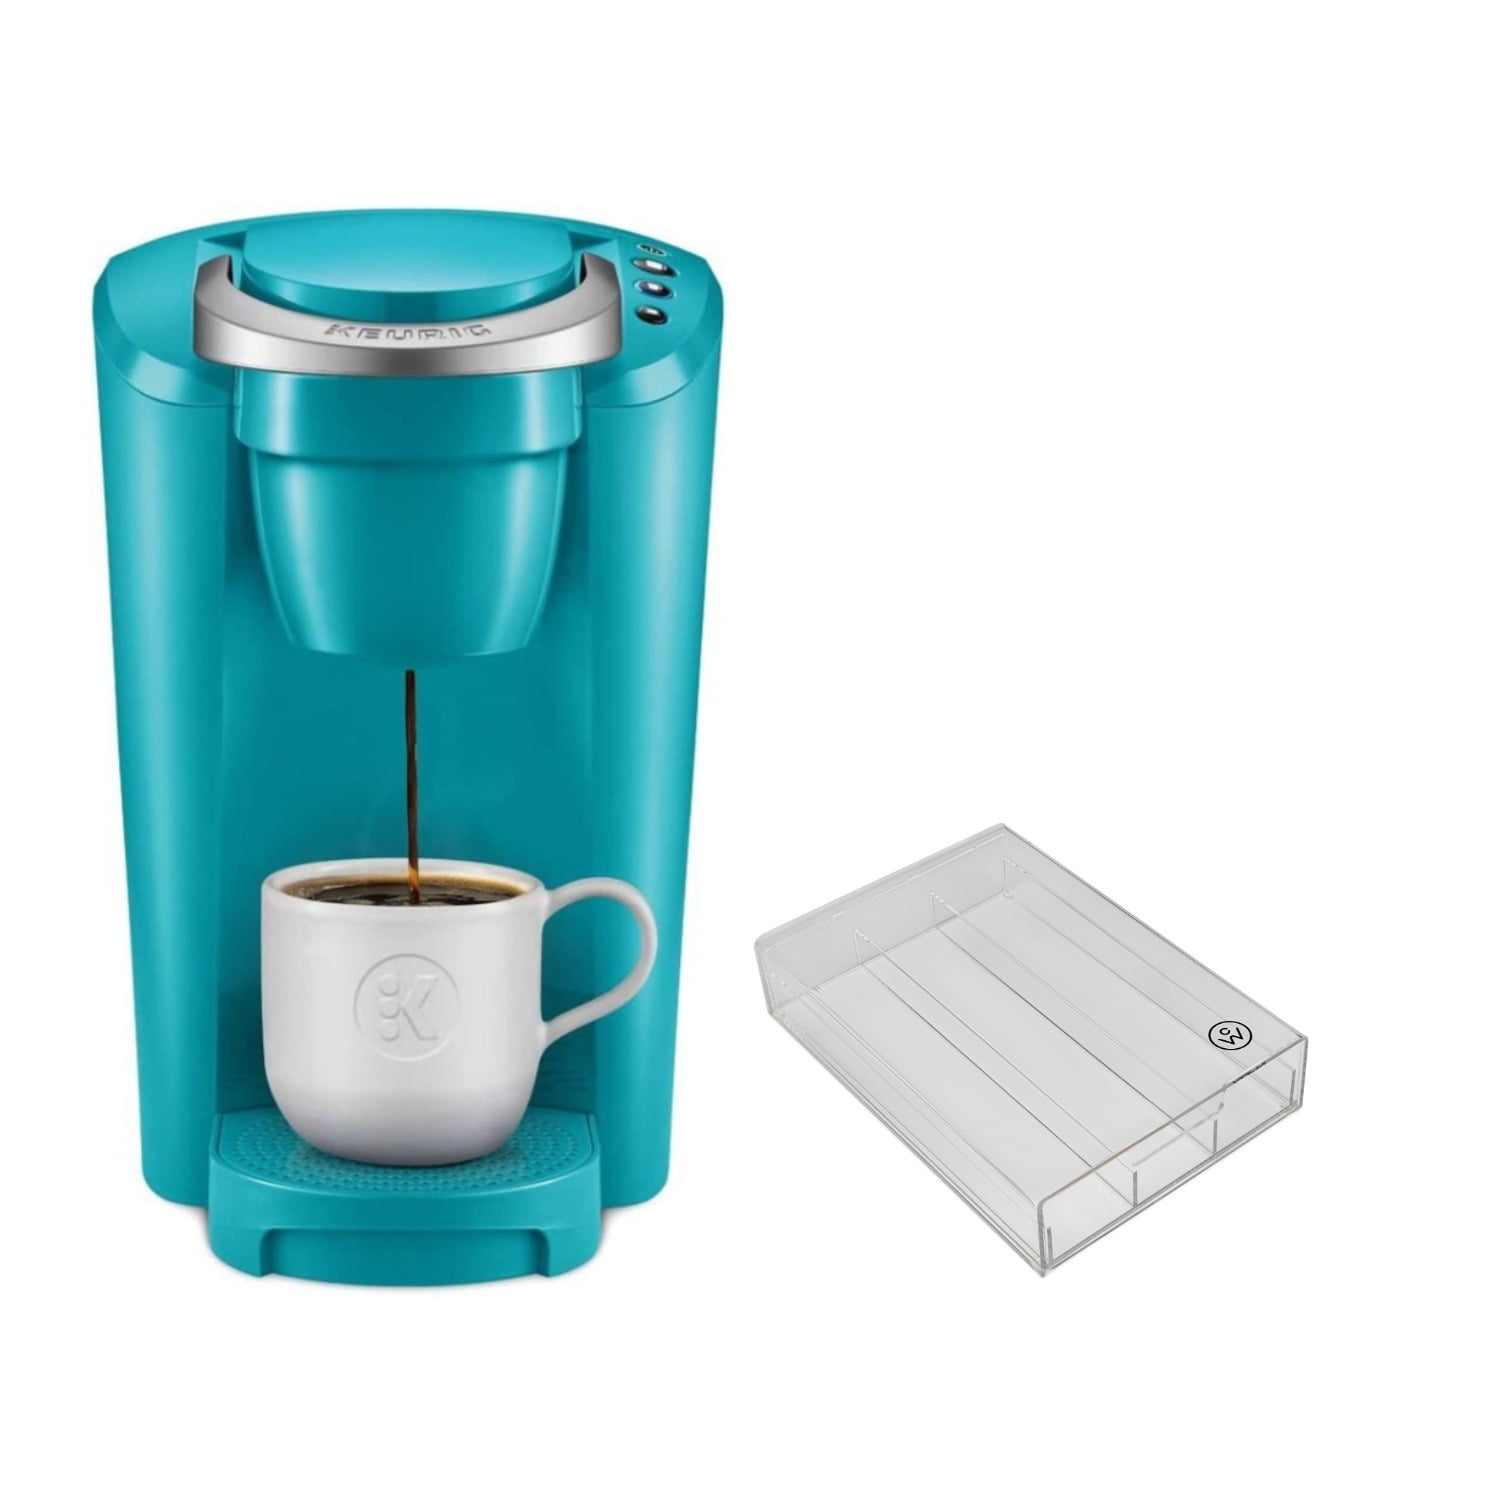 Keurig K-Café SMART Single-Serve Coffee Maker WiFi Compatibility